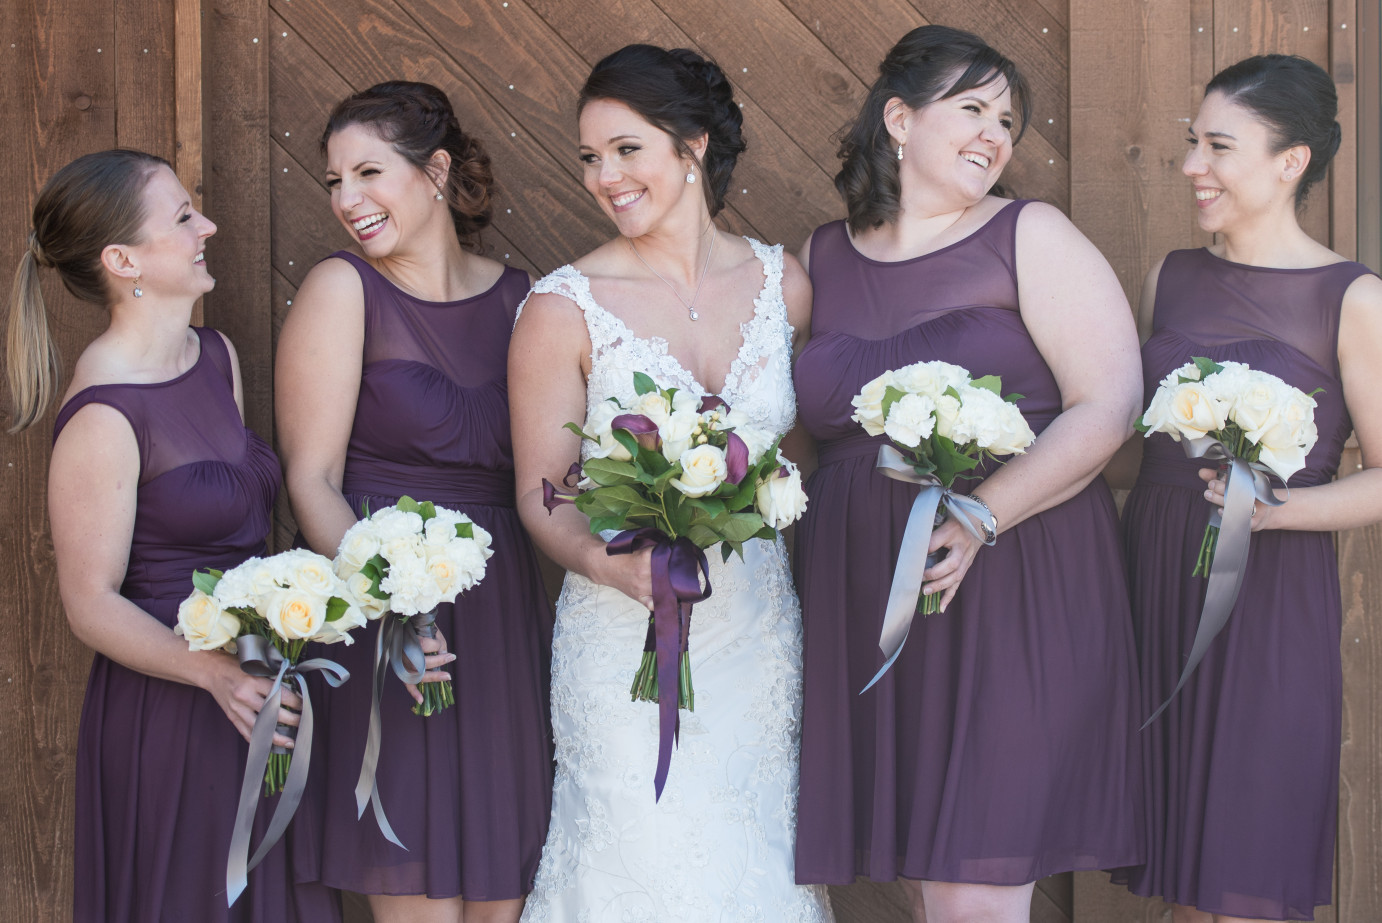 Bridesmaids dresses that don't break the bank Different bridesmaids in elegant purple dresses